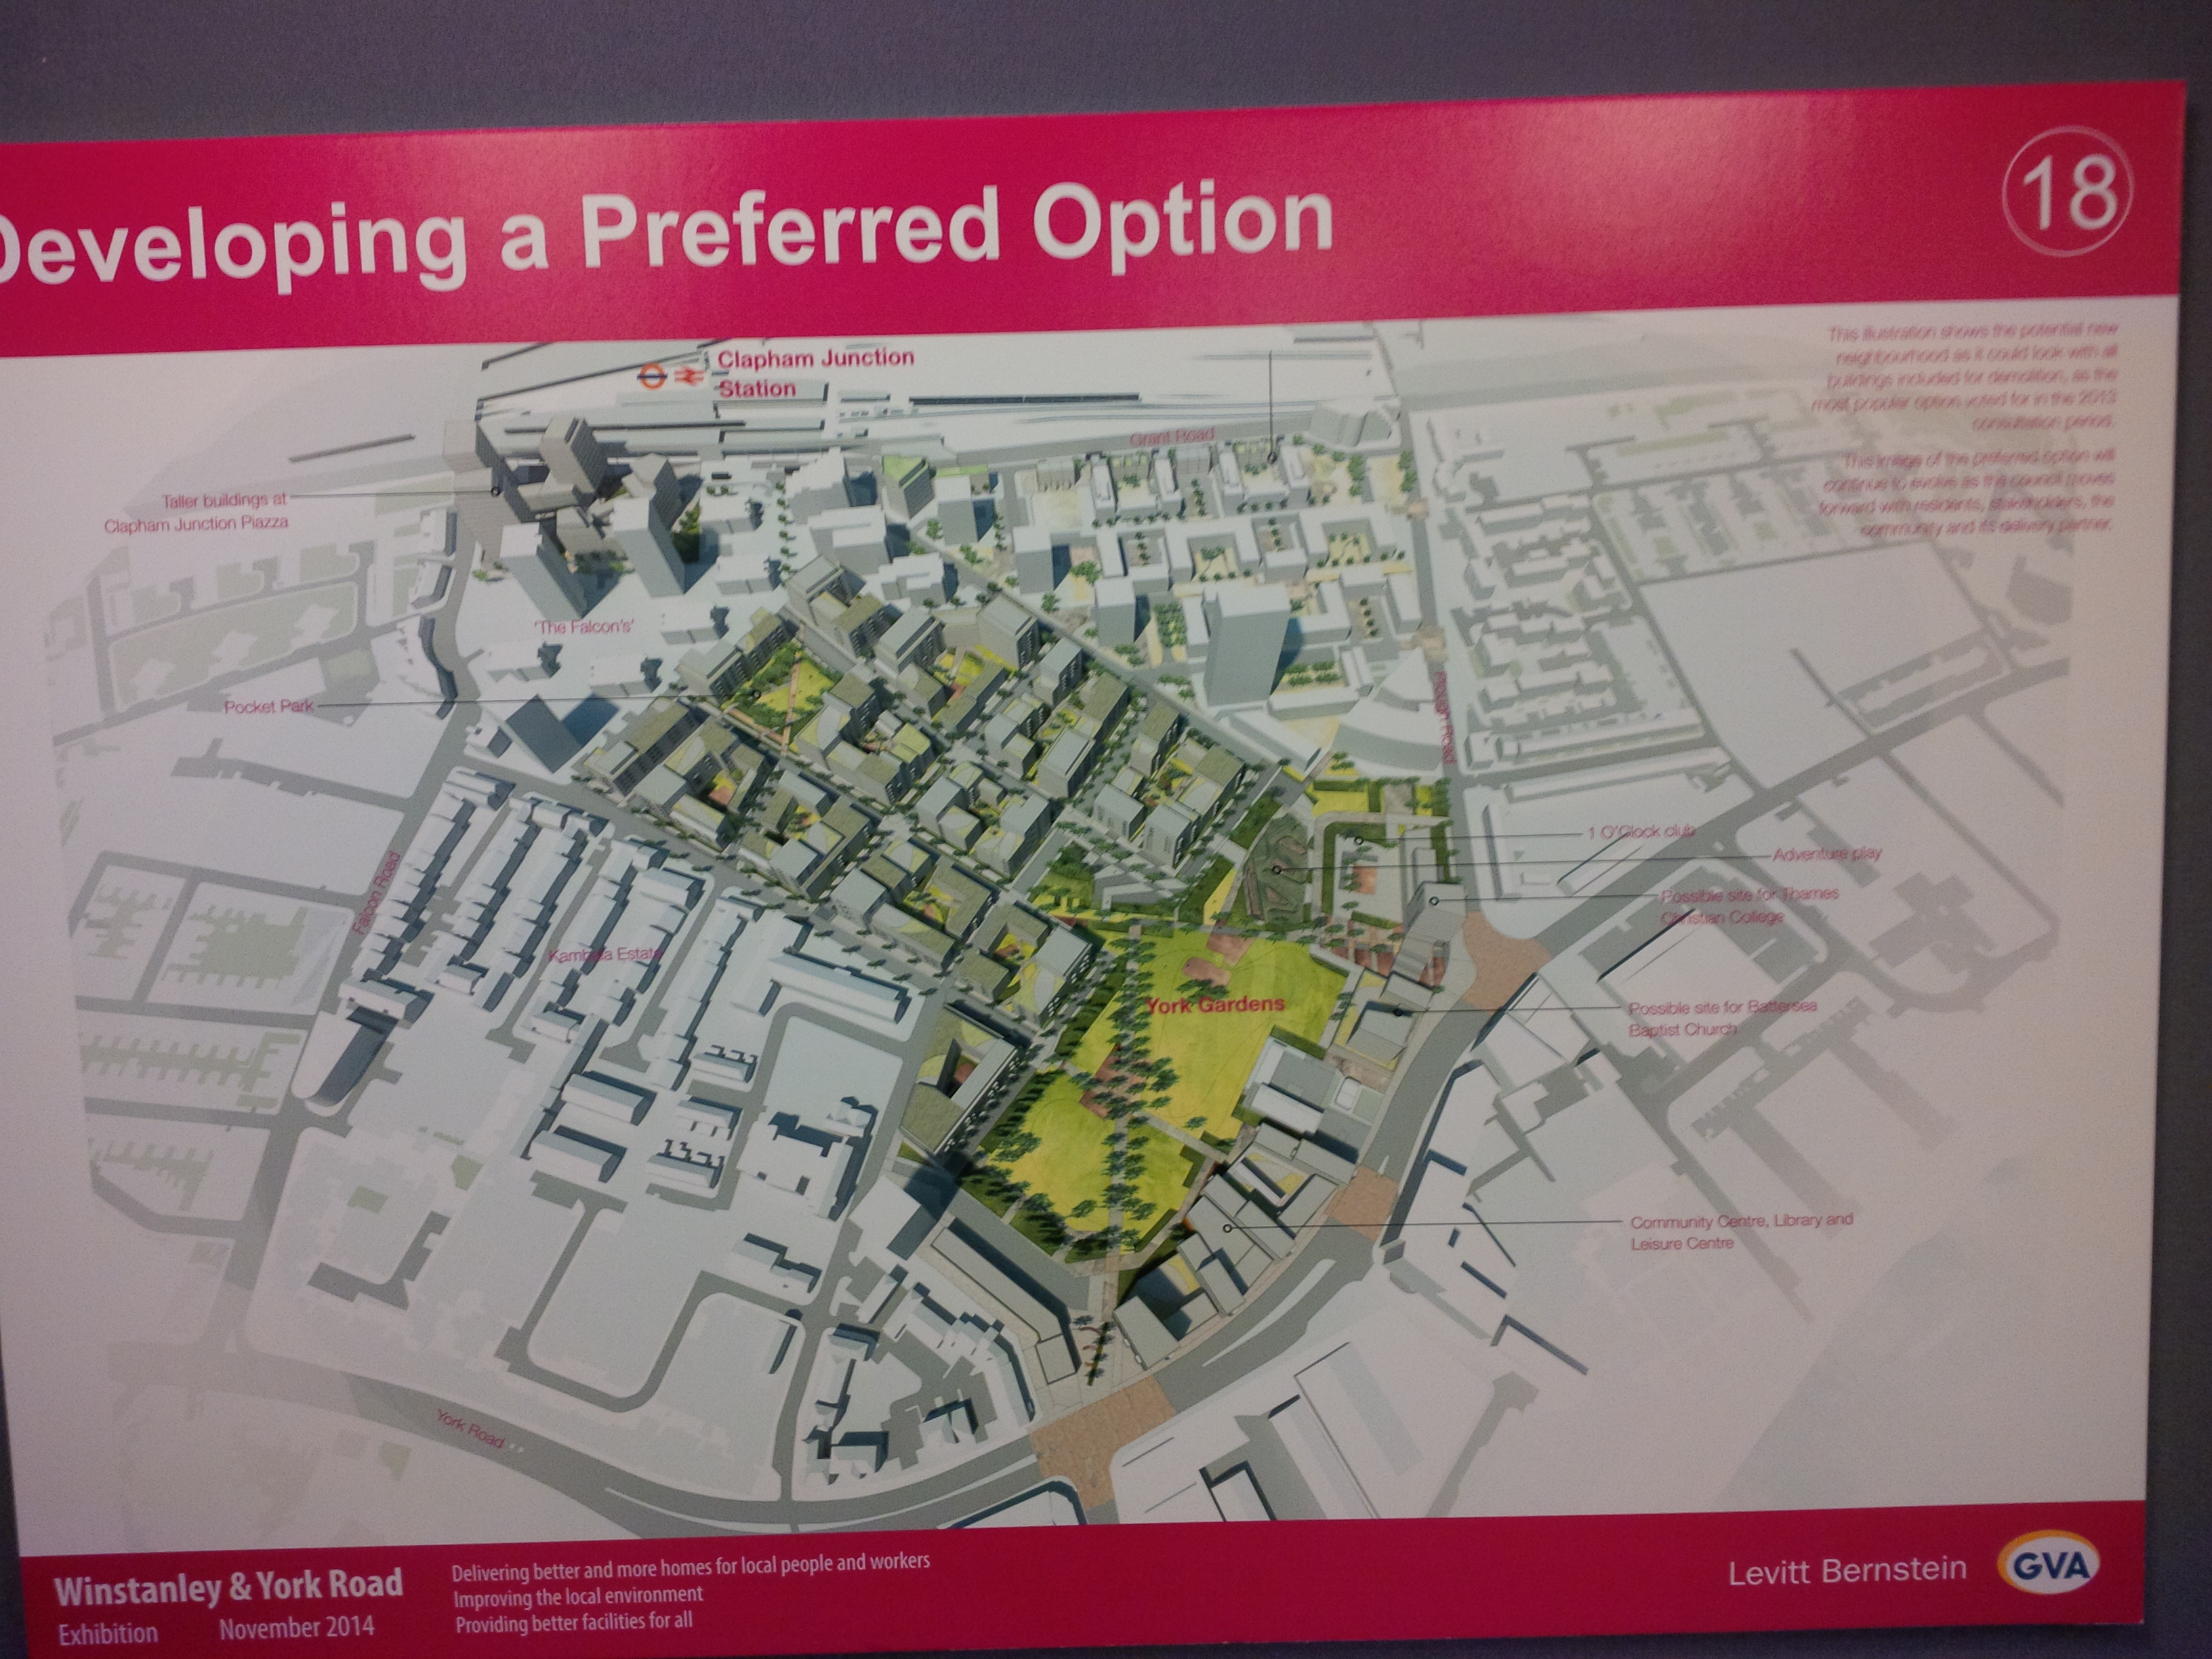 Winstanley & York Road preferred option - Feb 2015